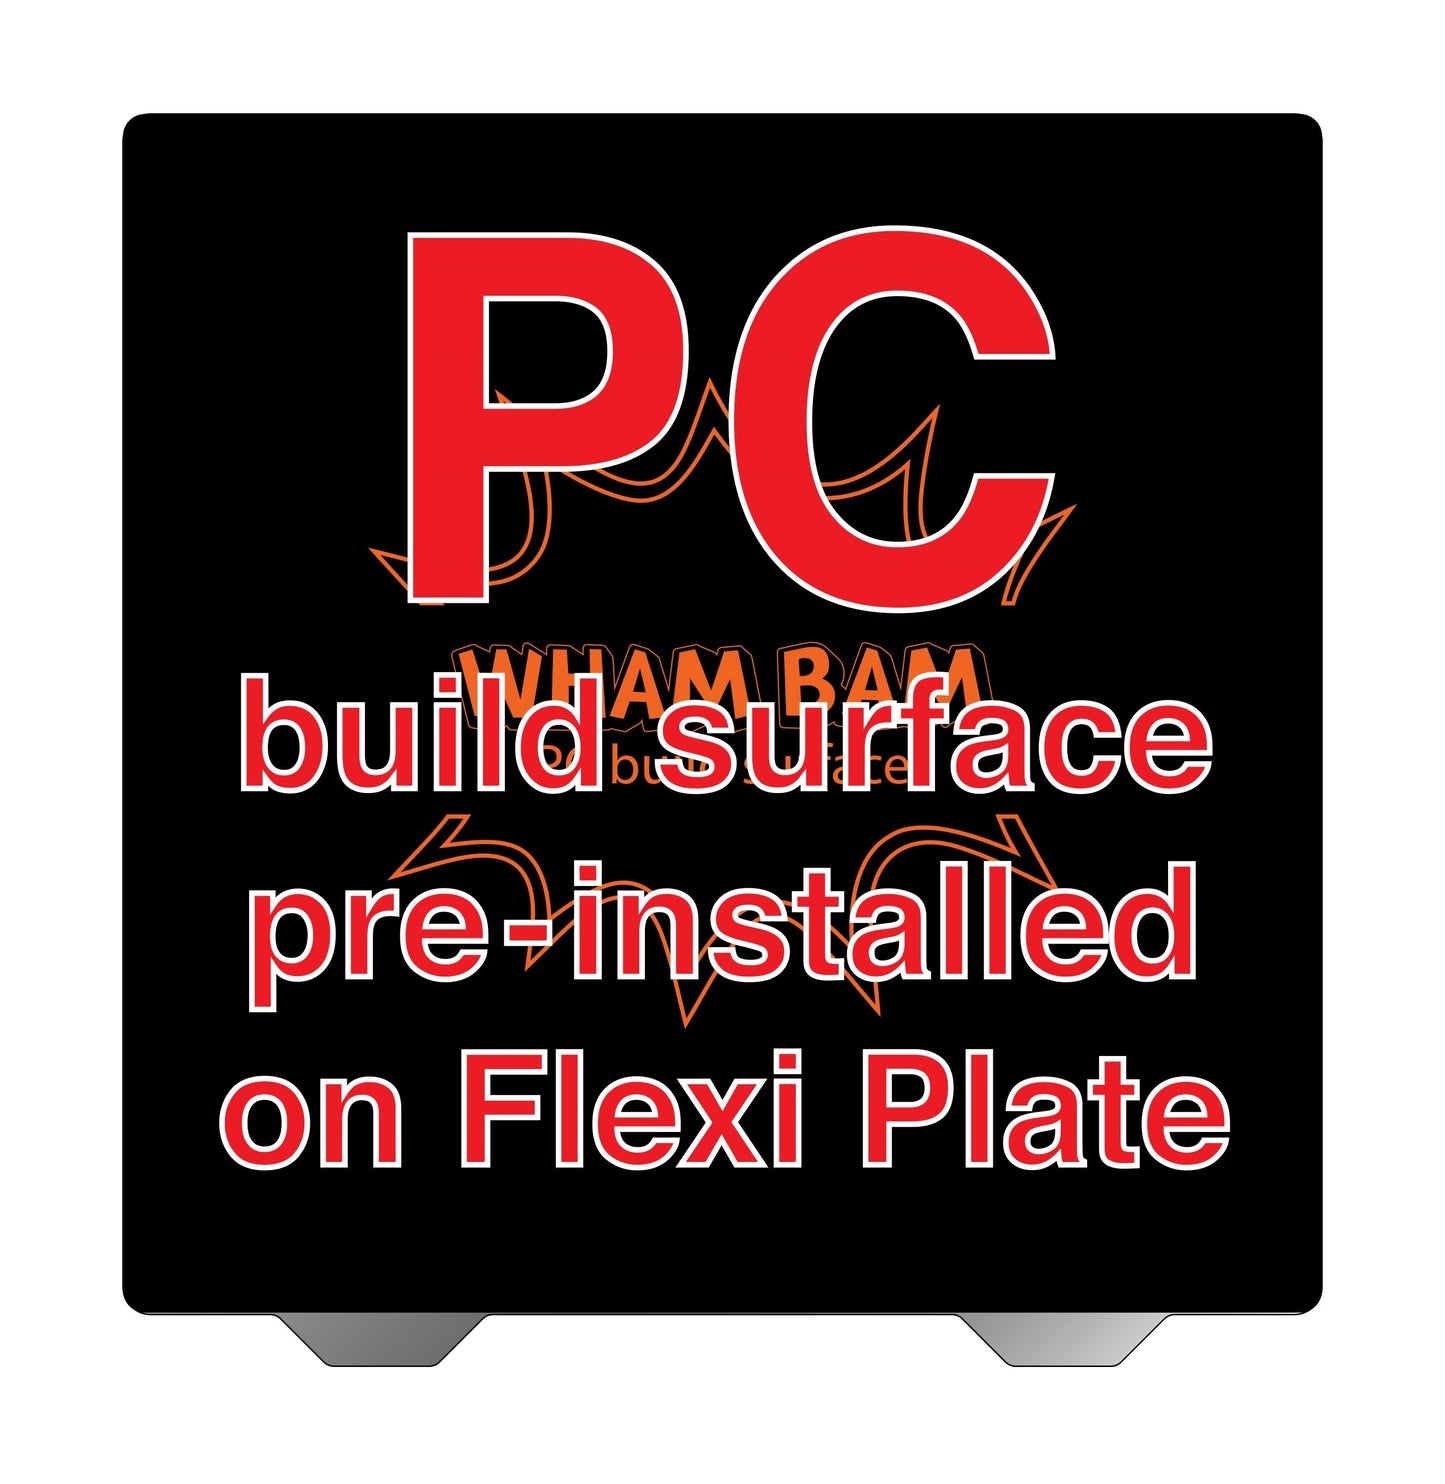 Flexi Plate with Pre-Installed PC Build Surface (Classic Black) - 330 x 330 - Geeetech A30, Raise3d Pro2 & Pro2 Plus, TronXY X3S  X5S